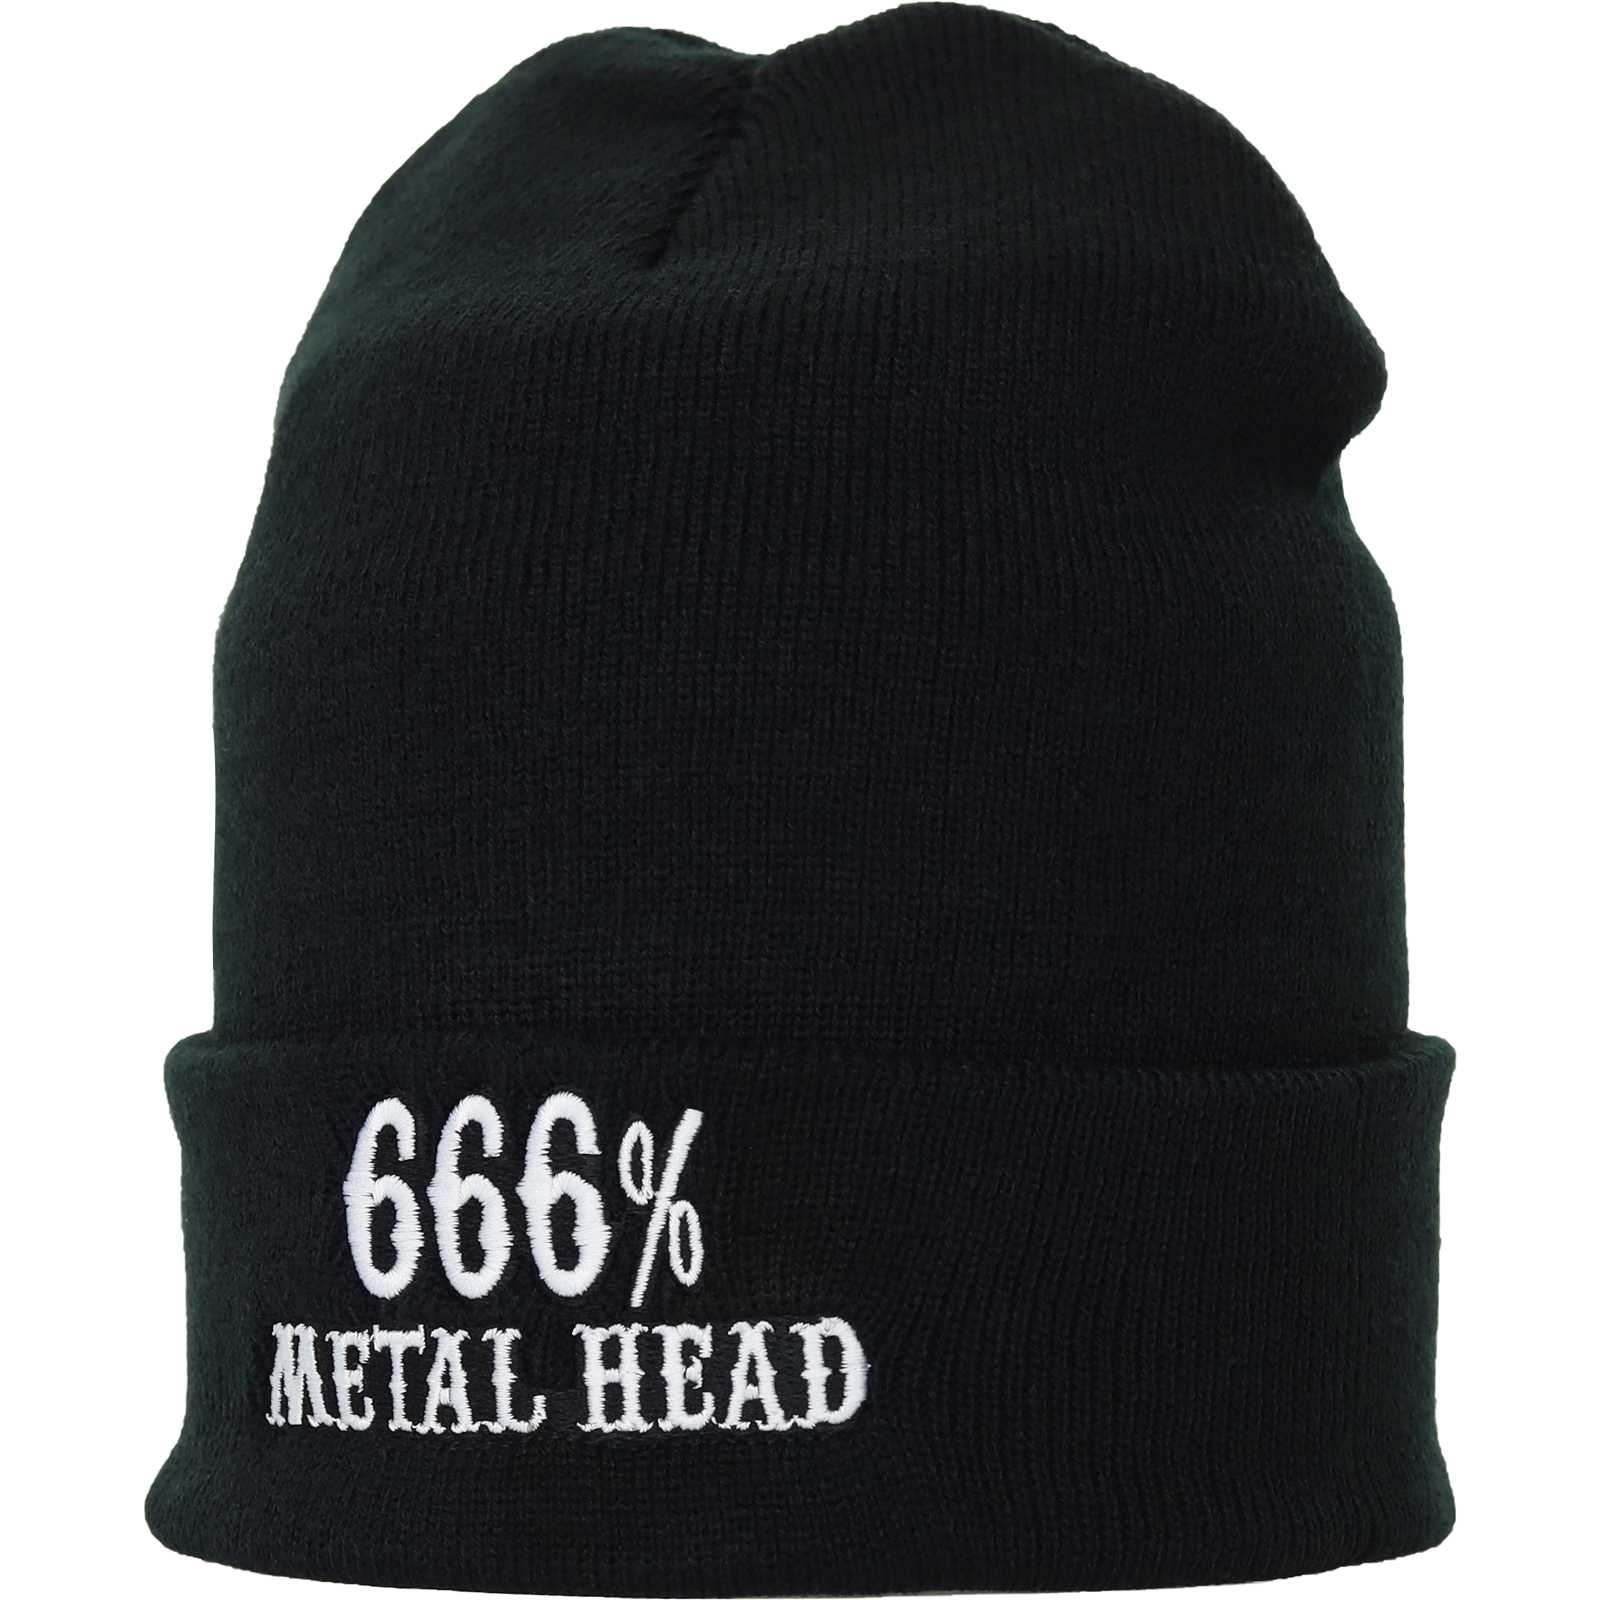 666% Metal Head - Strickmütze